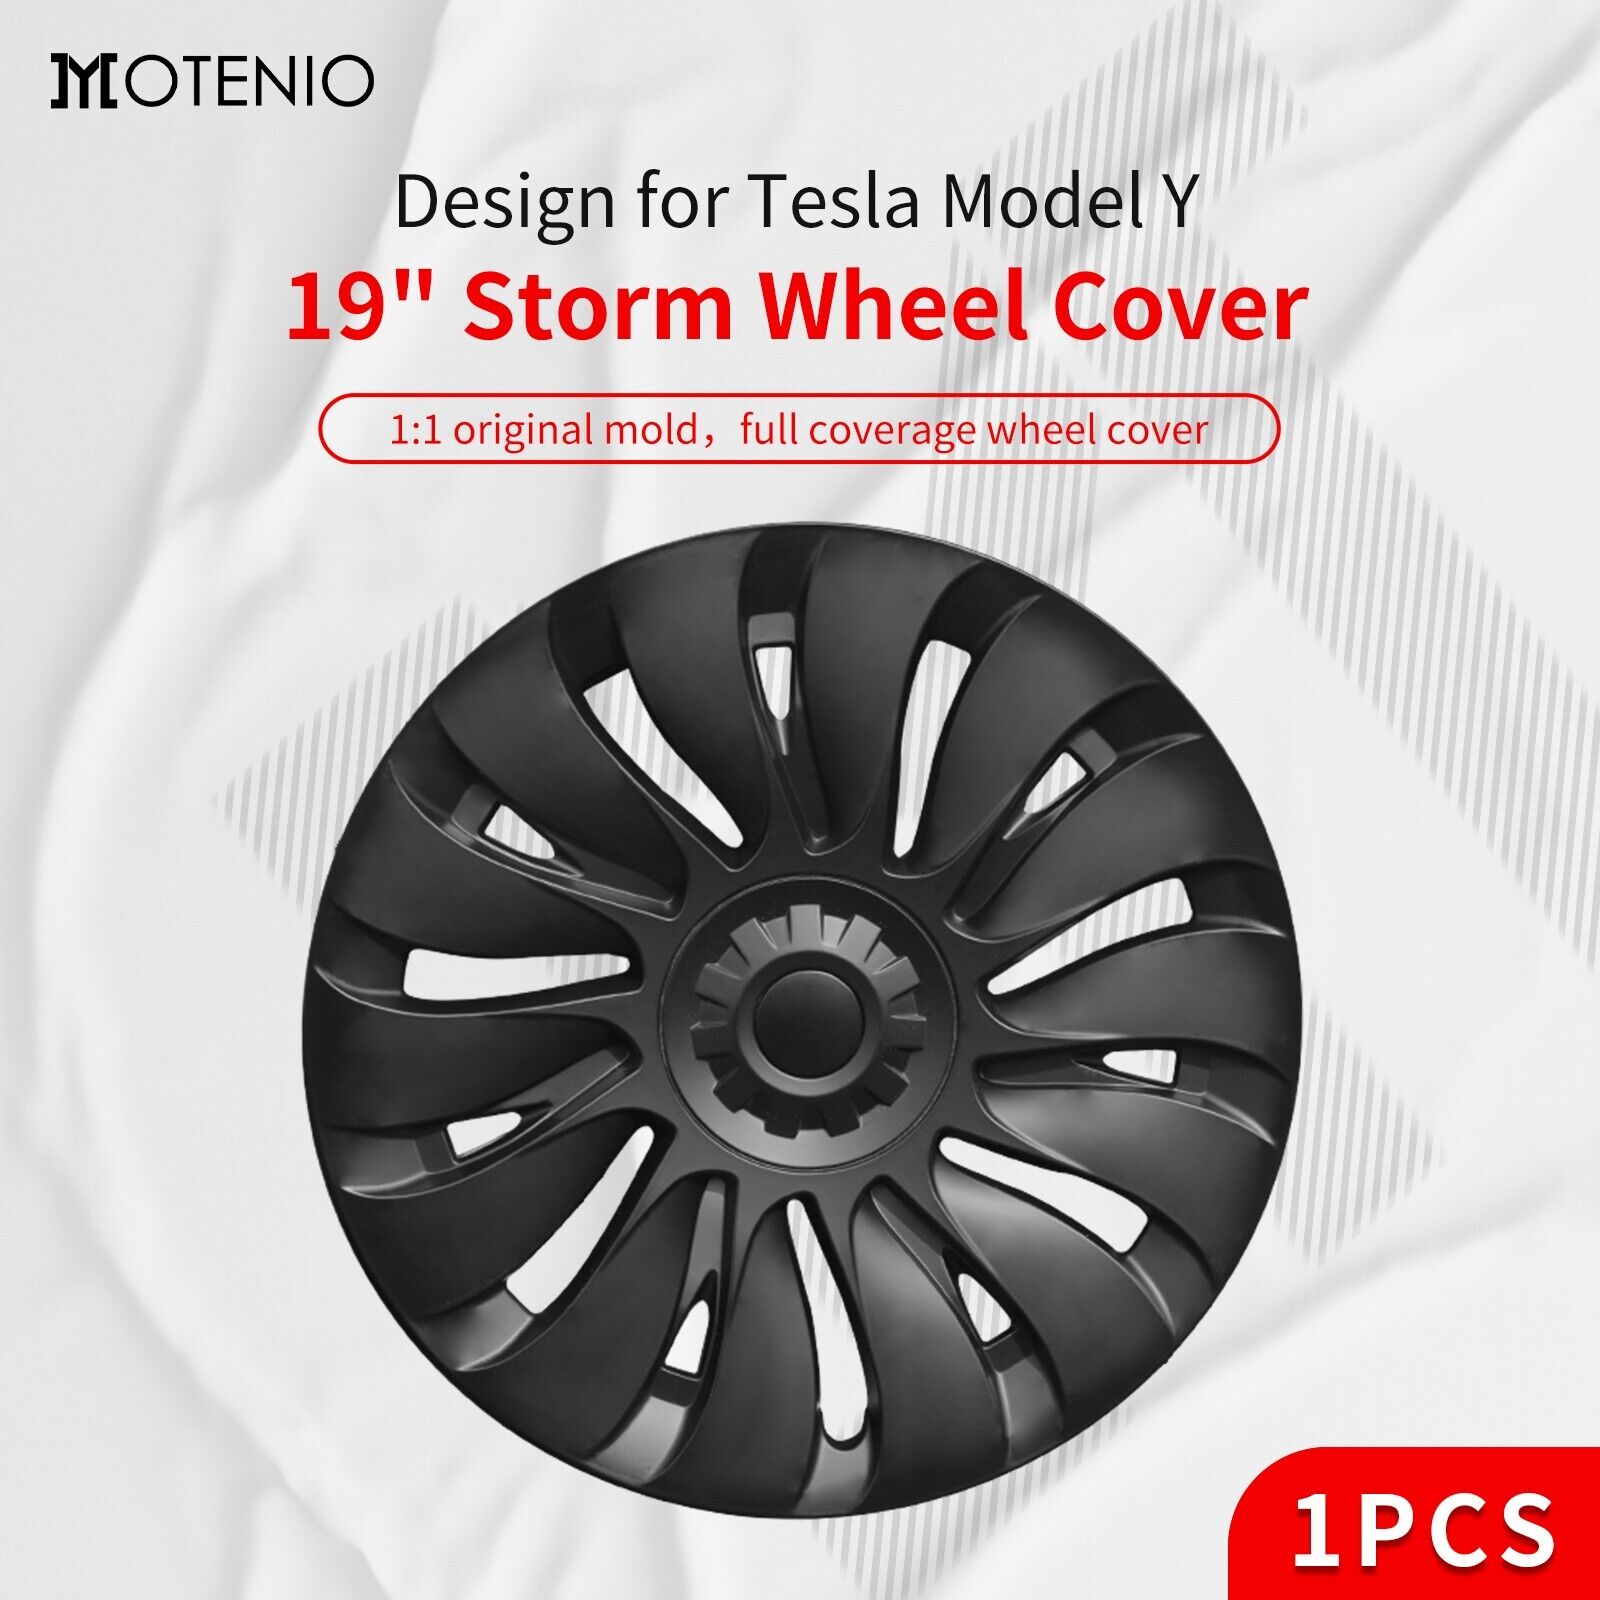 1PCS Hubcap for Tesla Model Y Storm Wheel Cover 19 inch Left Hubcap Full Cover